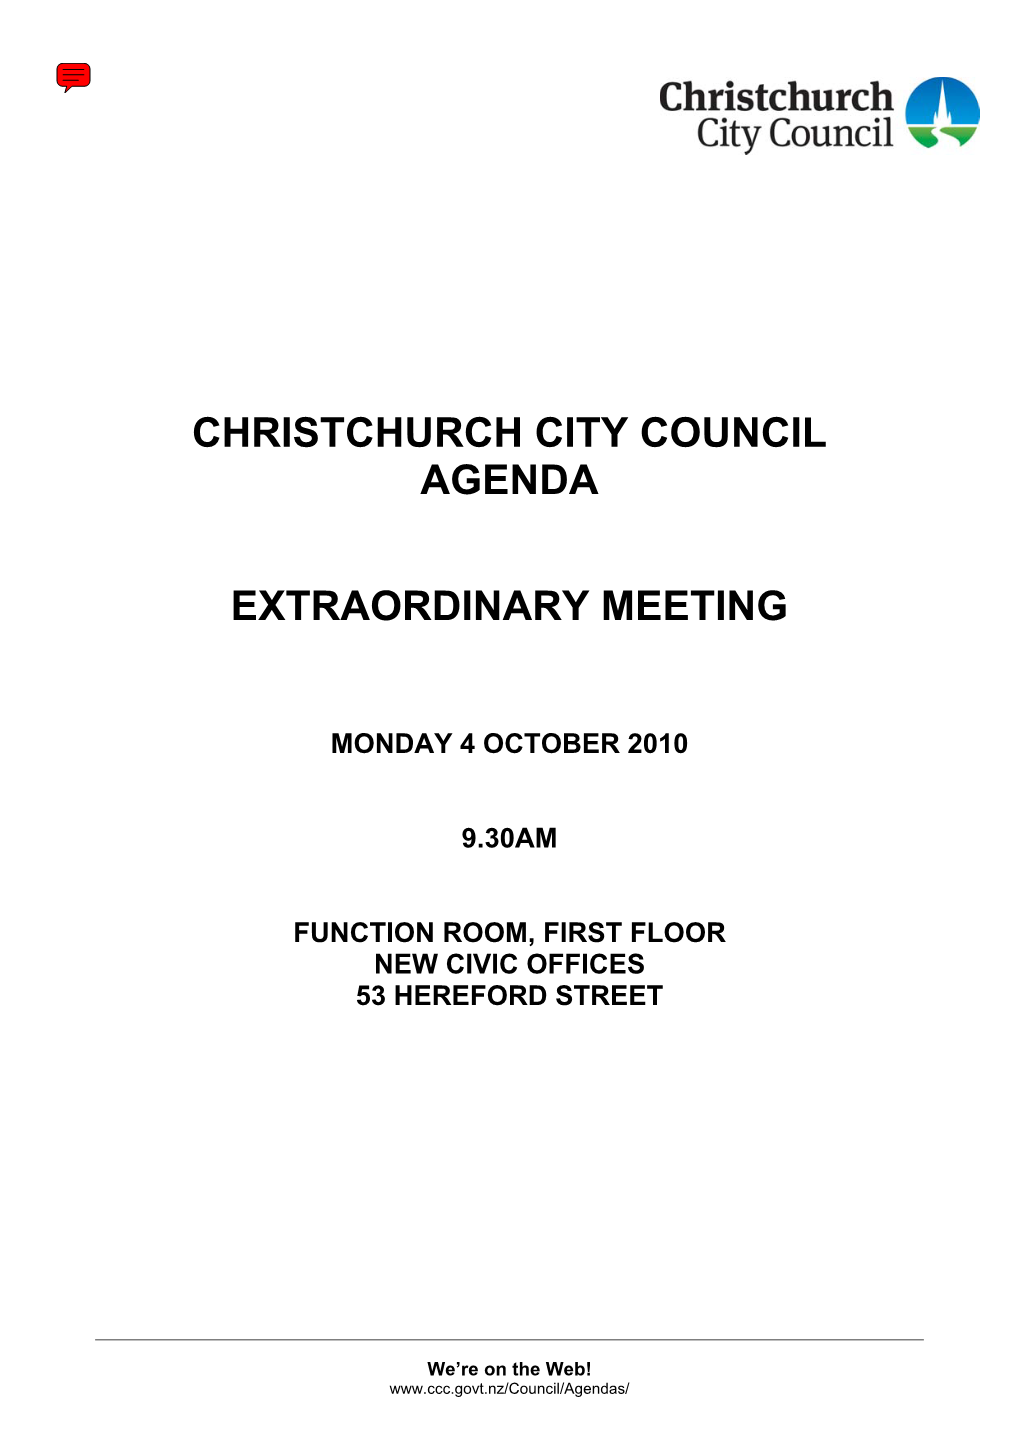 Council Agenda 4 October 2010